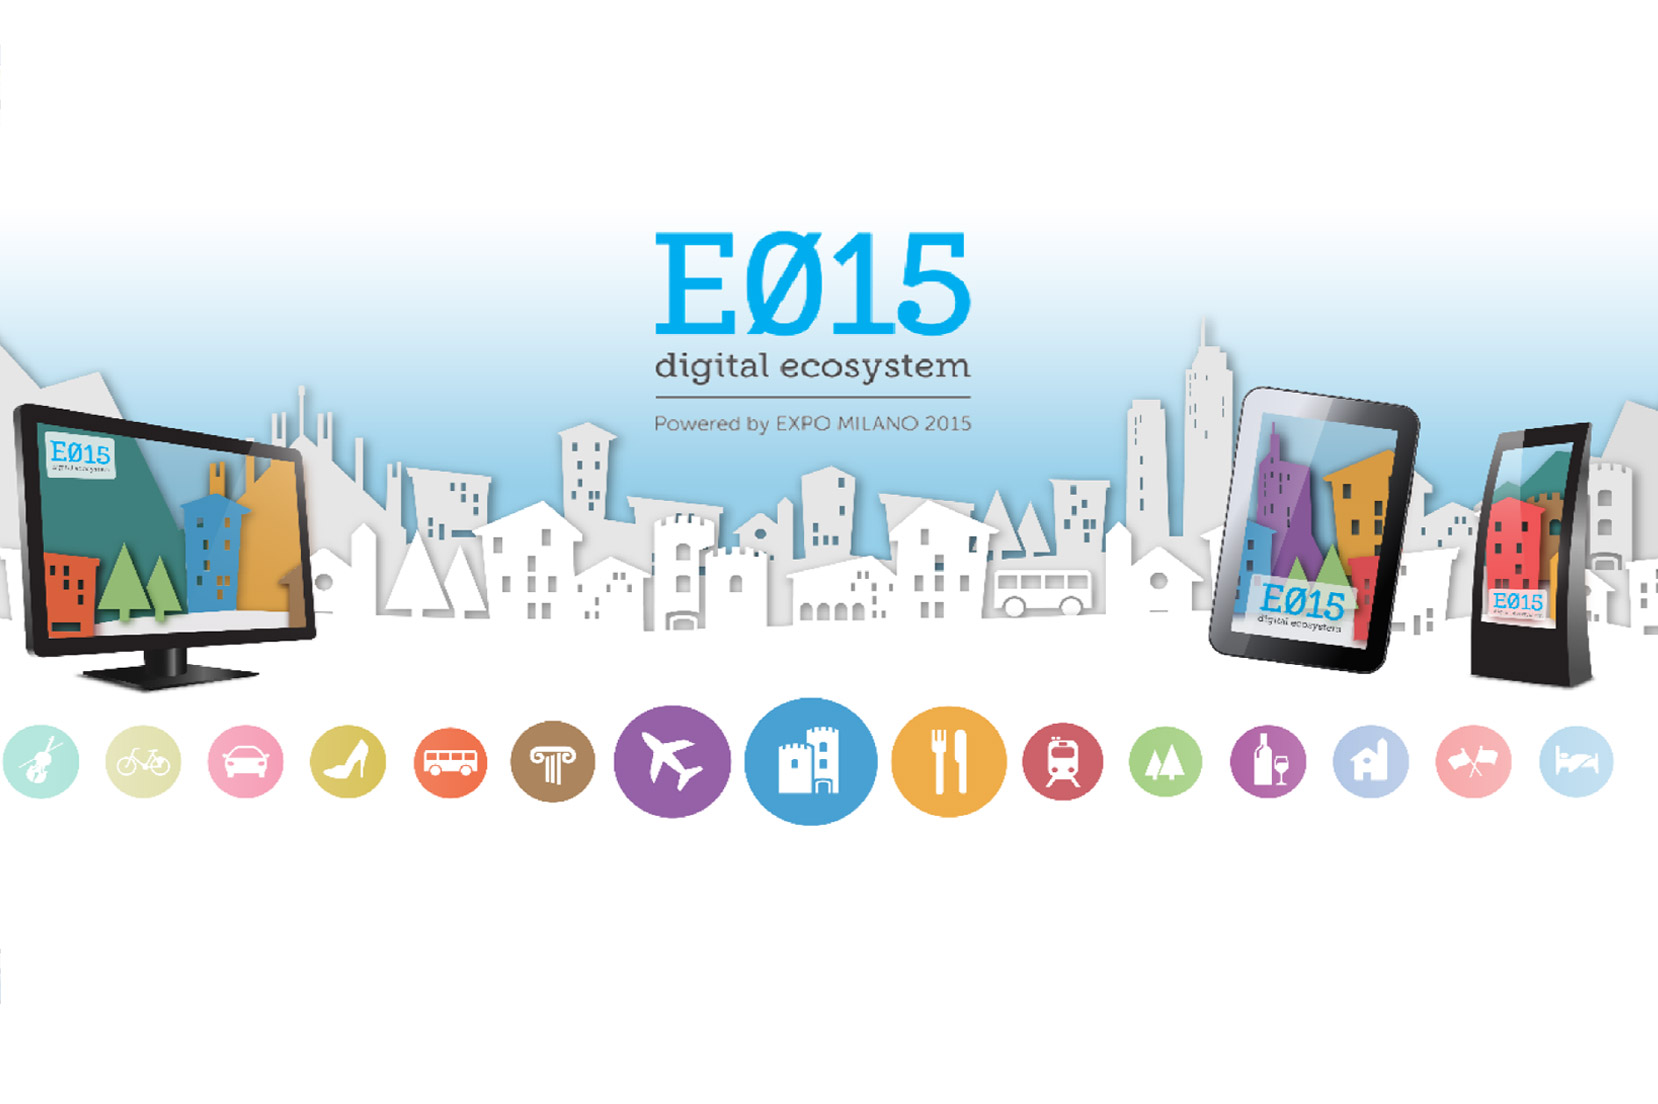 Ecosistema Digitale E015